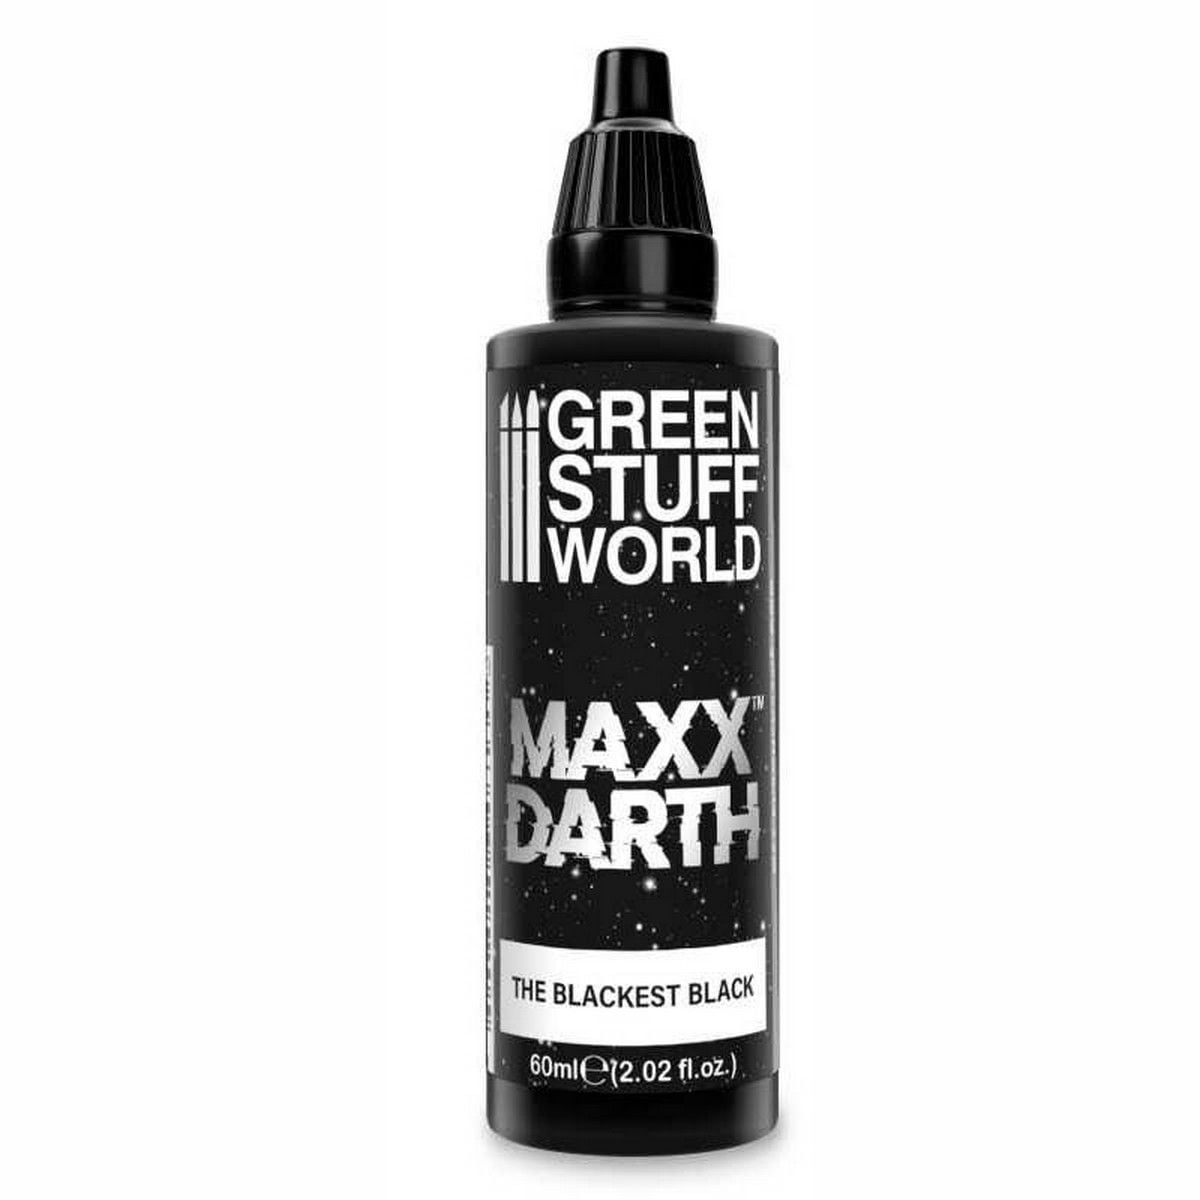 Maxx Darth Paint 60 ml